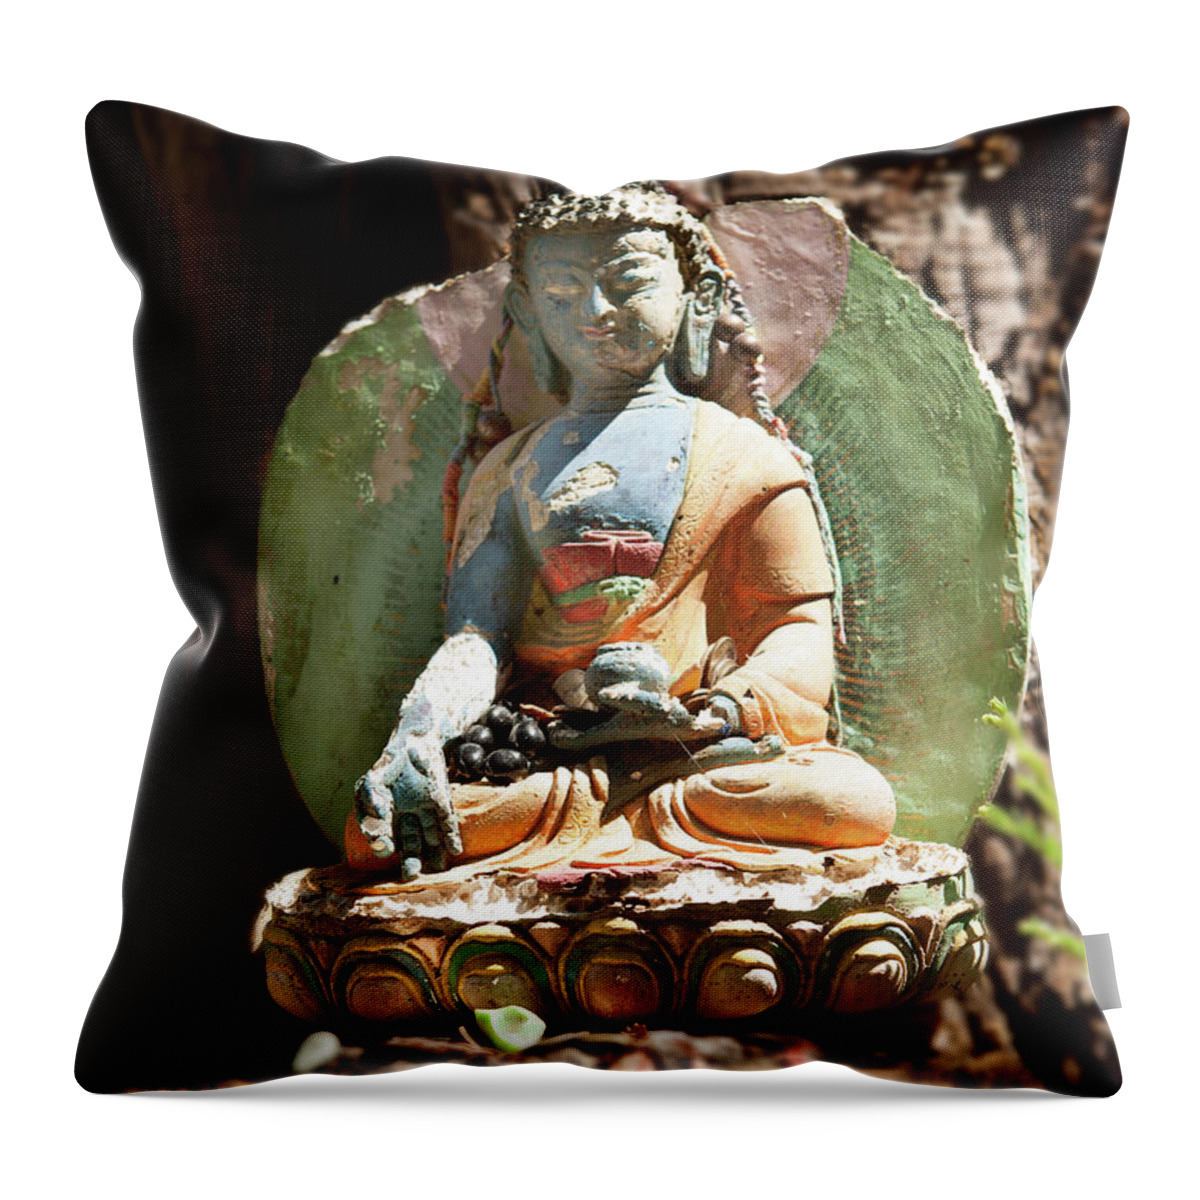 Aptos Ca Throw Pillow featuring the photograph Medicine Buddha with Offerings by Carol Lynn Coronios